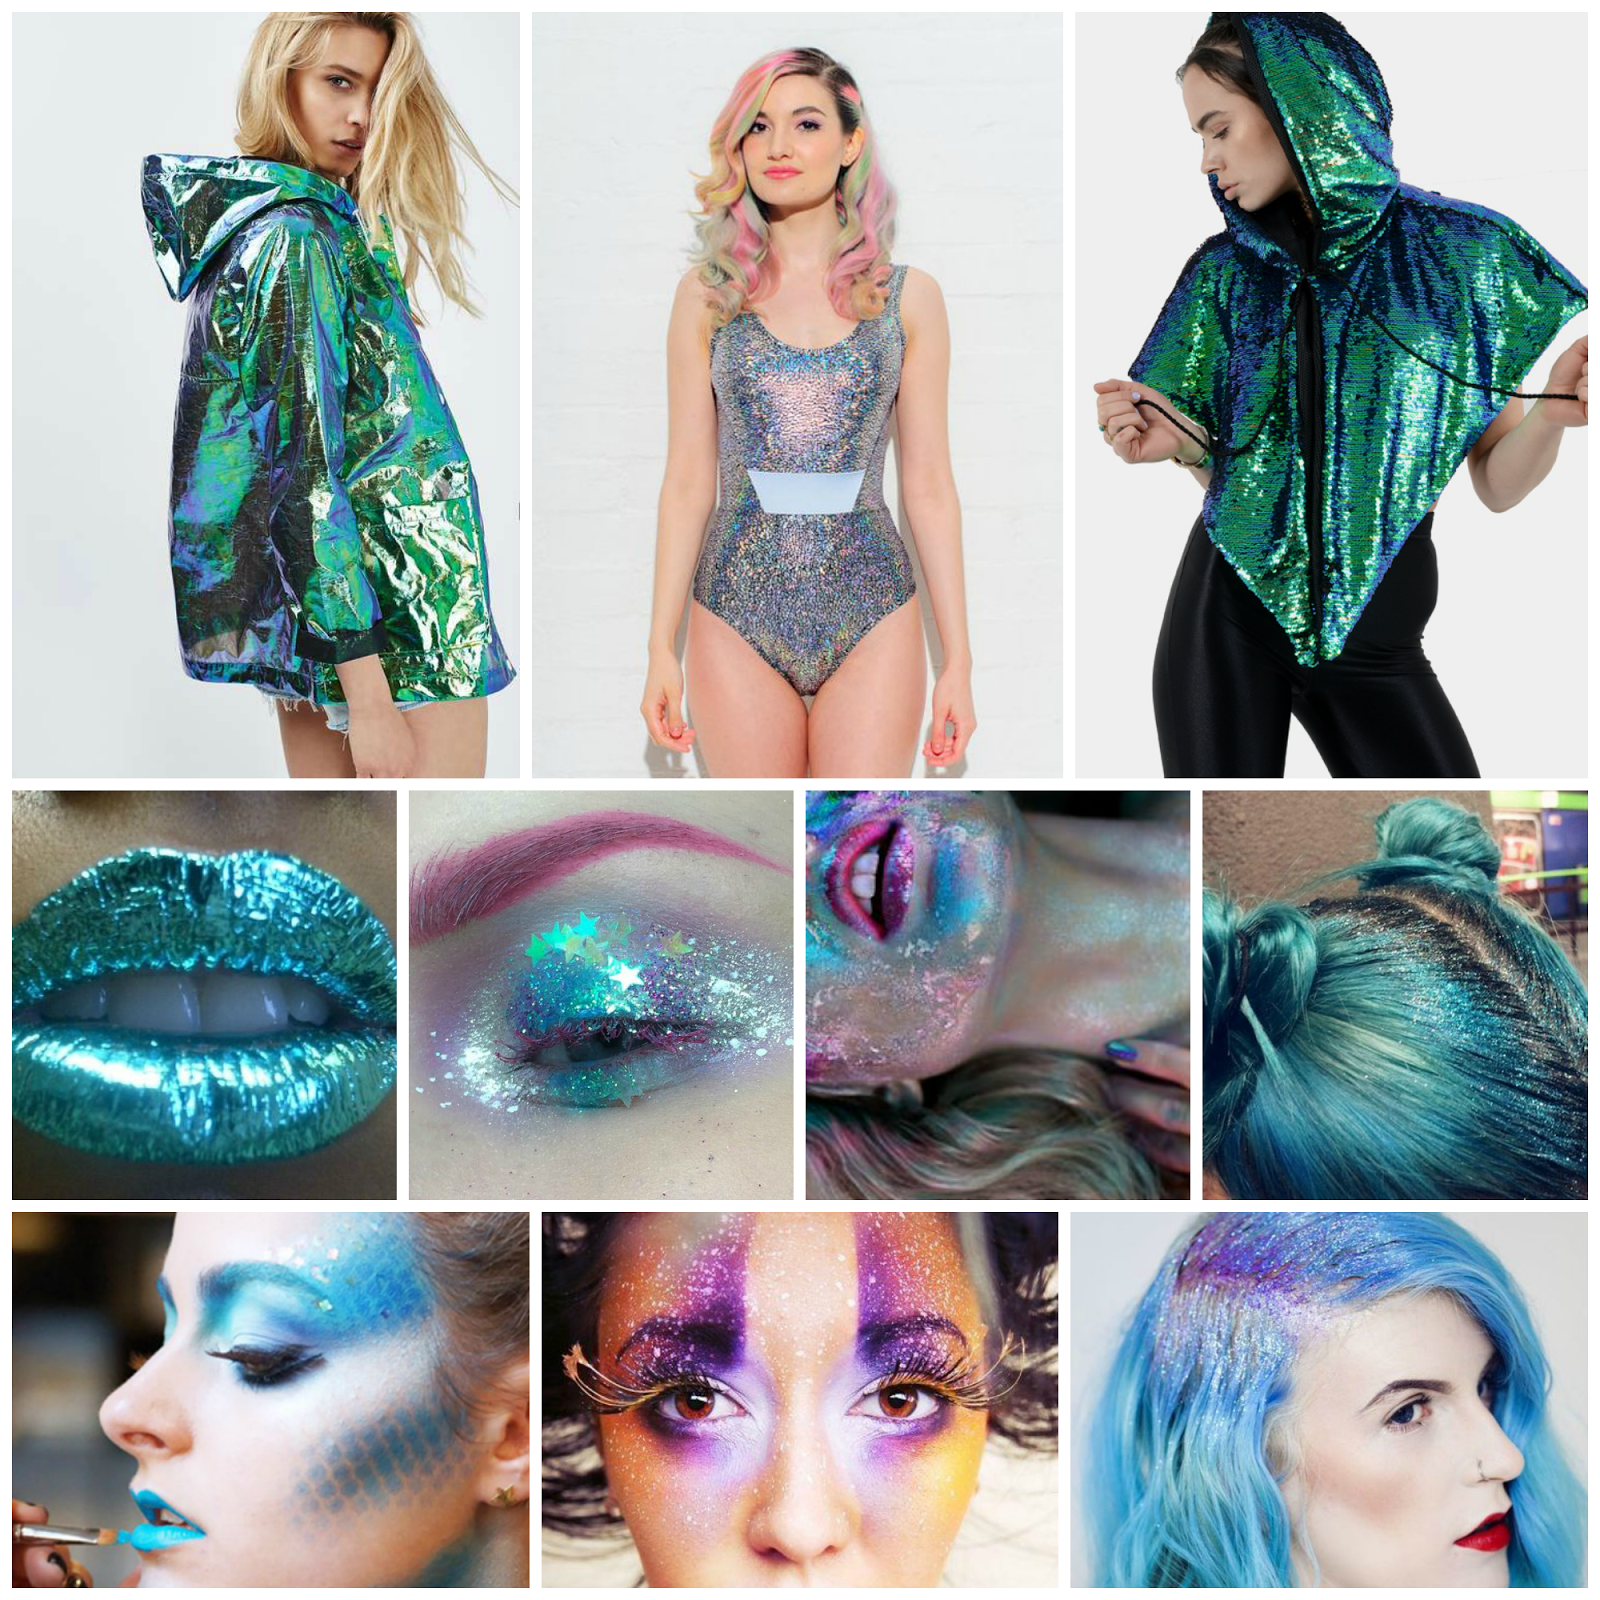 Secret Garden Party 2016, alien fancy dress, space costume, glitter make-up, holographic rain coat, Burnt Soul, Fuud, sequins, festival,